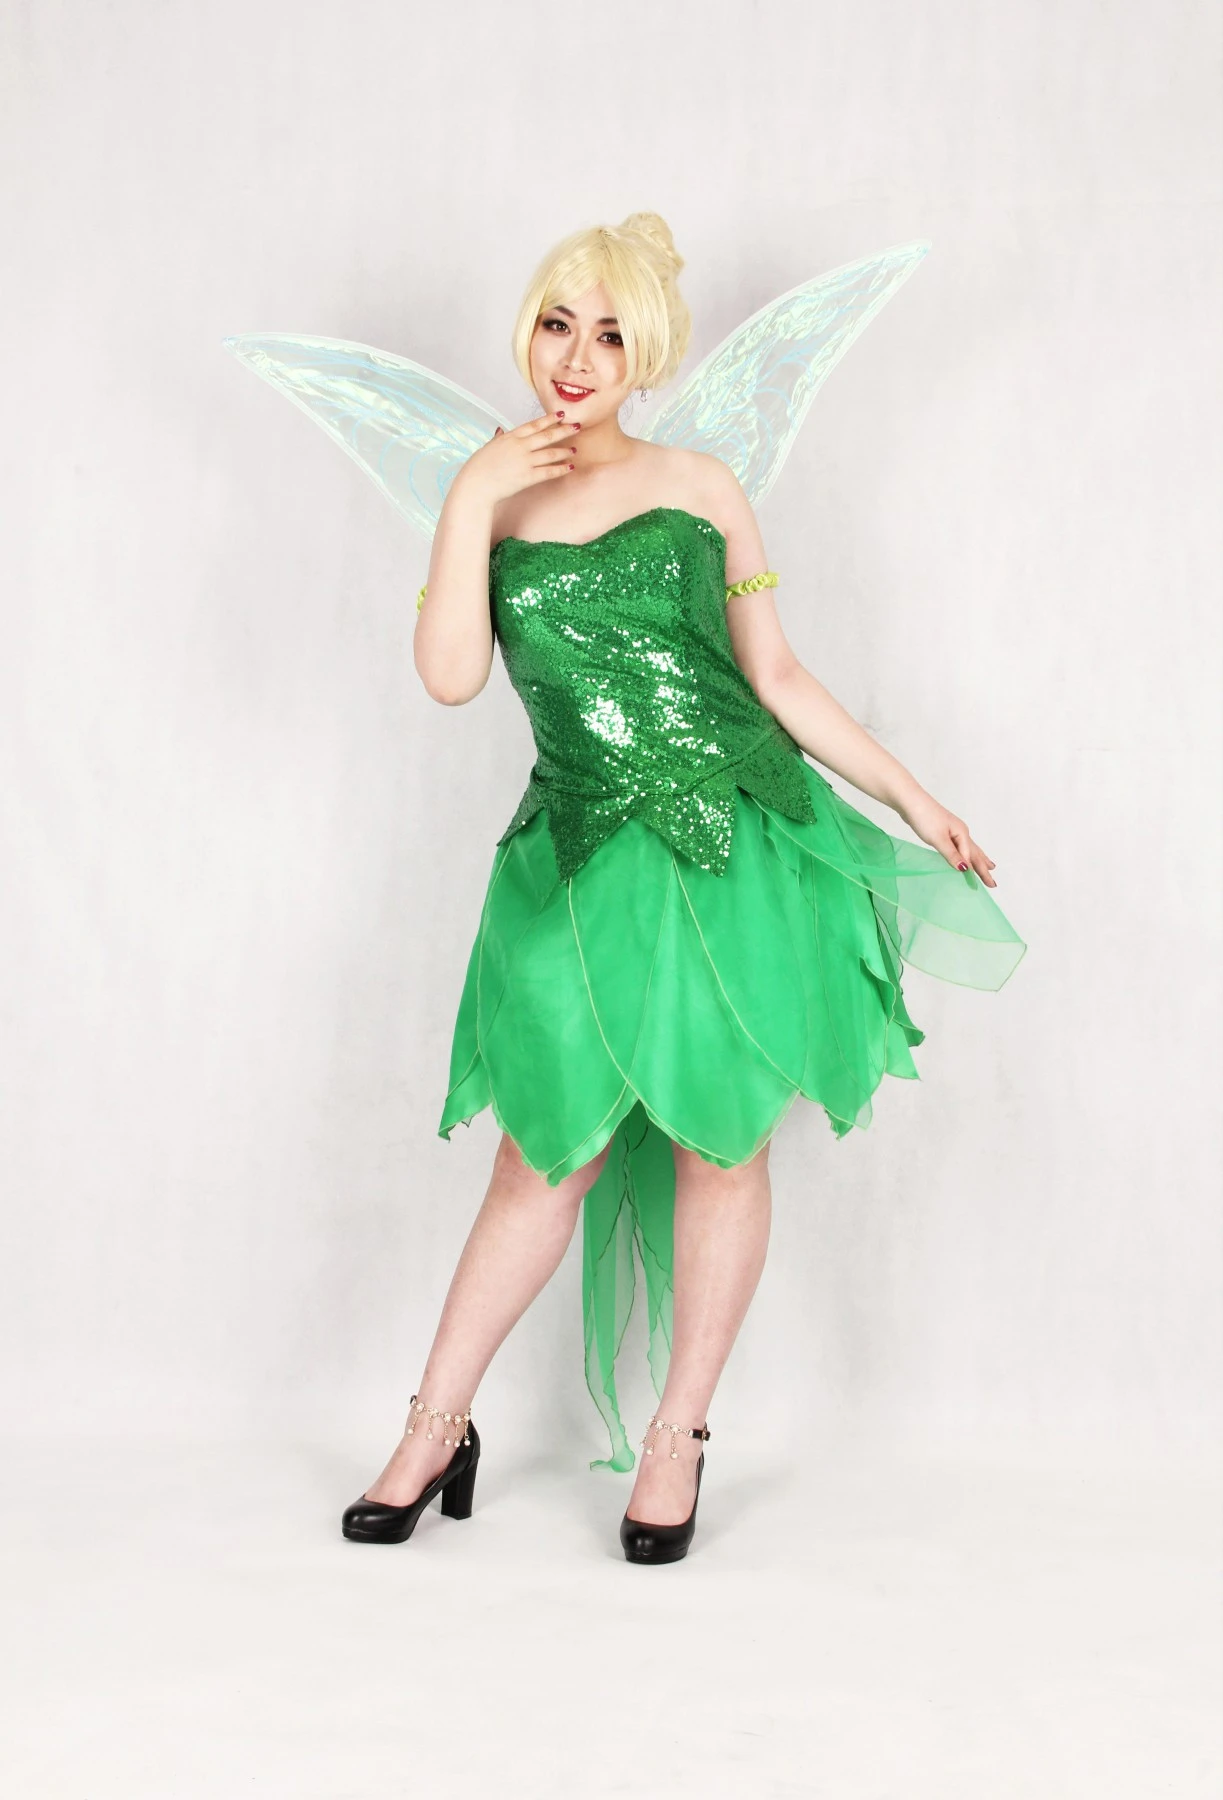 Fairy Tinkerbell Green Dress Costume Adult Women coplay Halloween Costume Set (Dress Set) P1910